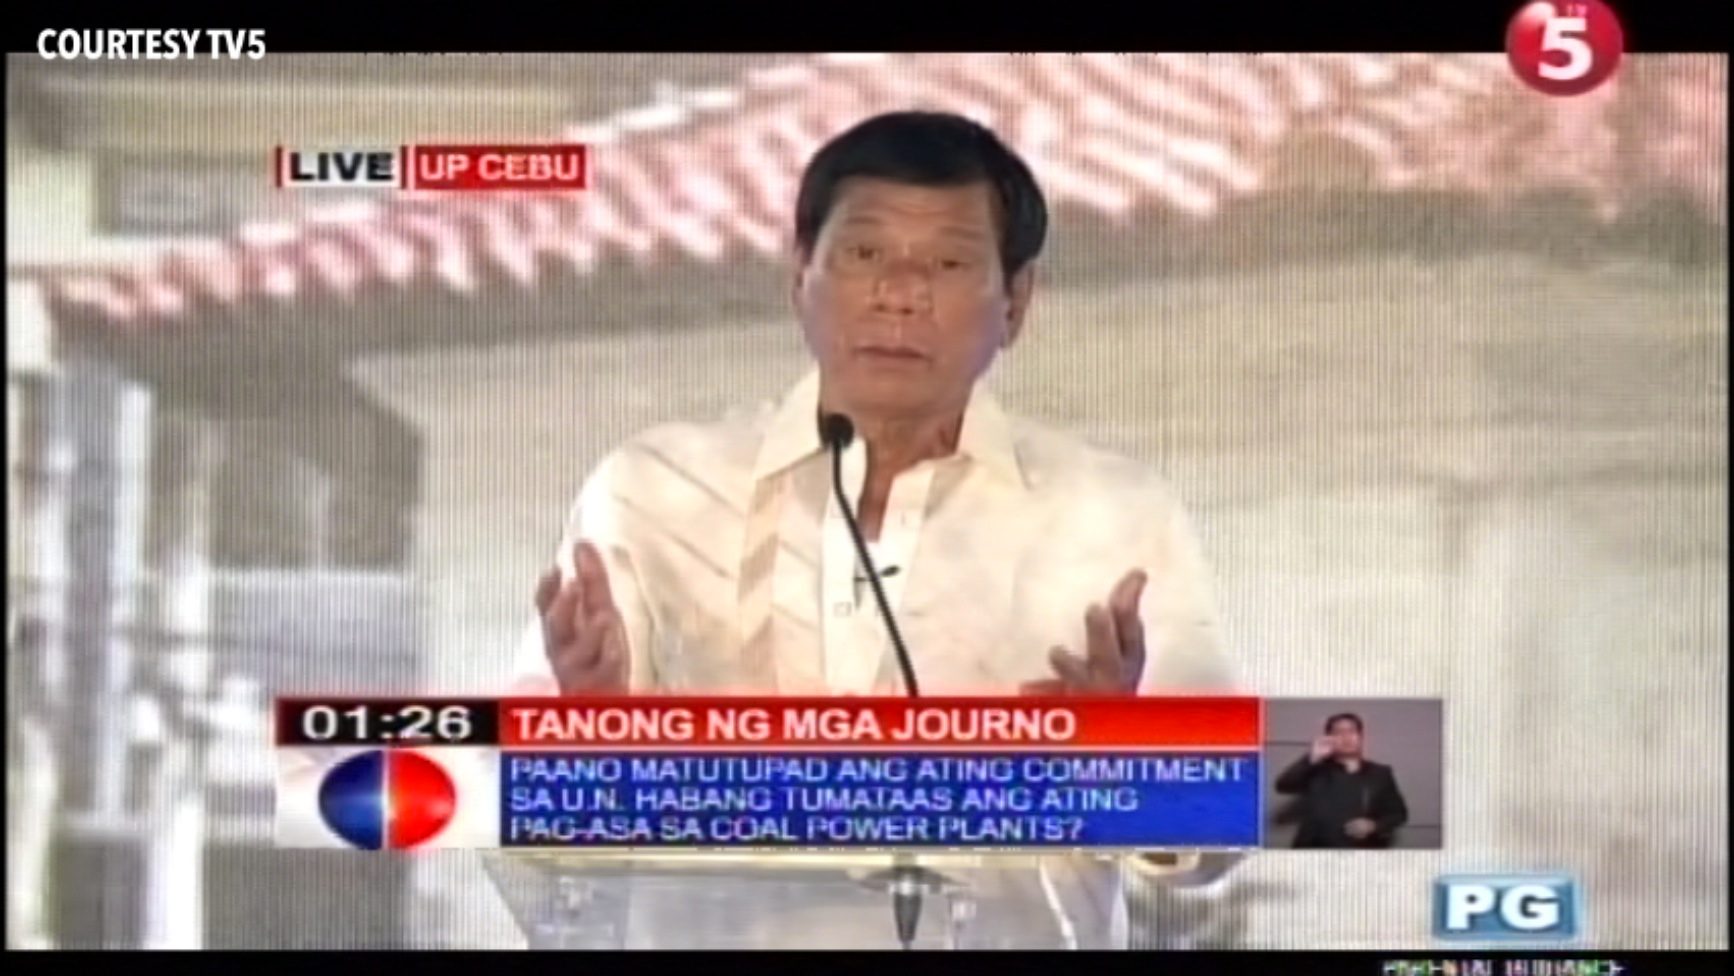 Still top choice: Duterte is netizens’ pick for Round 2, Part 1 of debate